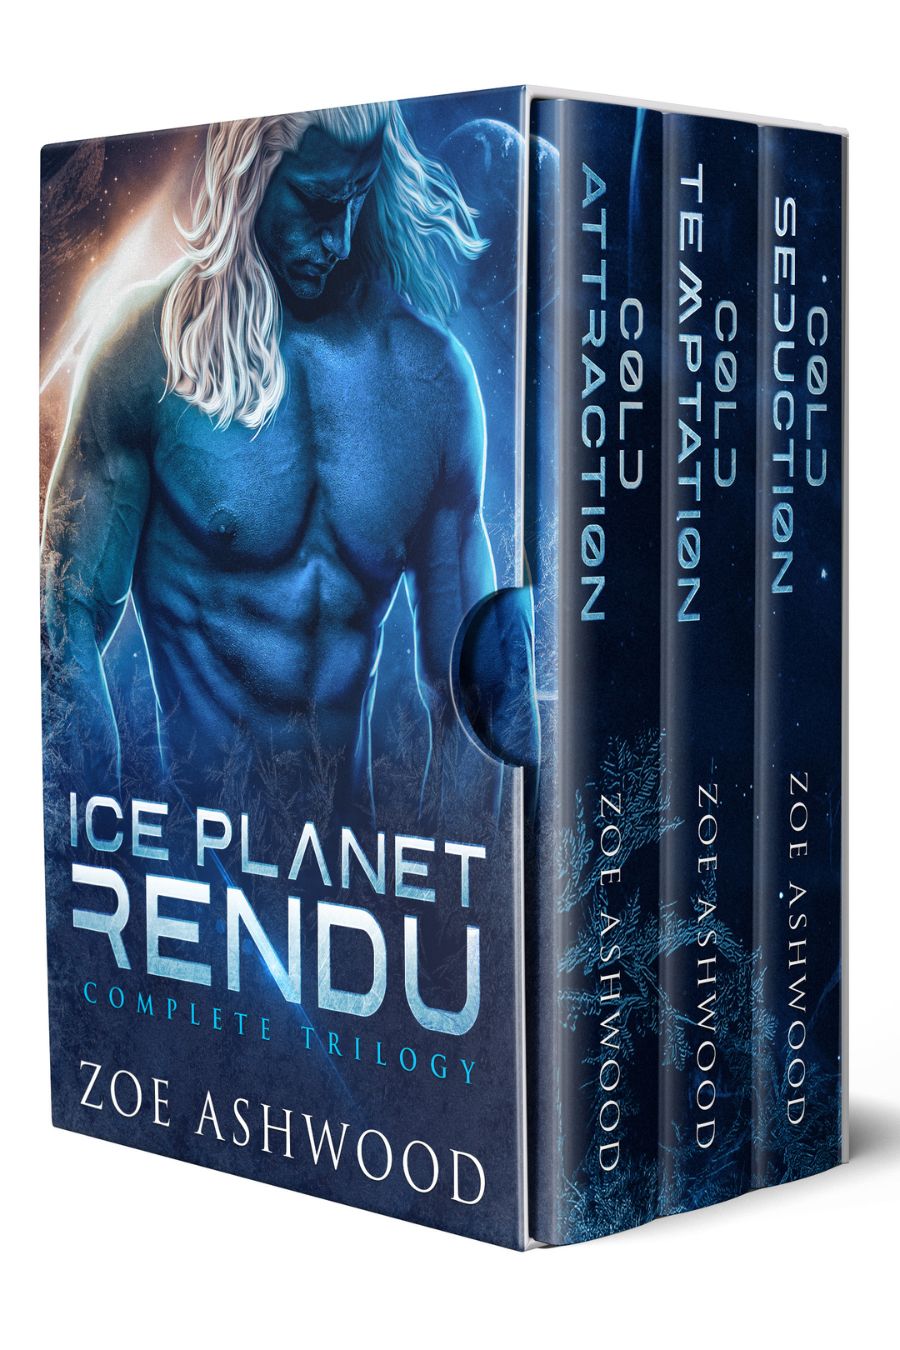 The Ice Planet Rendu Box Set by Zoe Ashwood